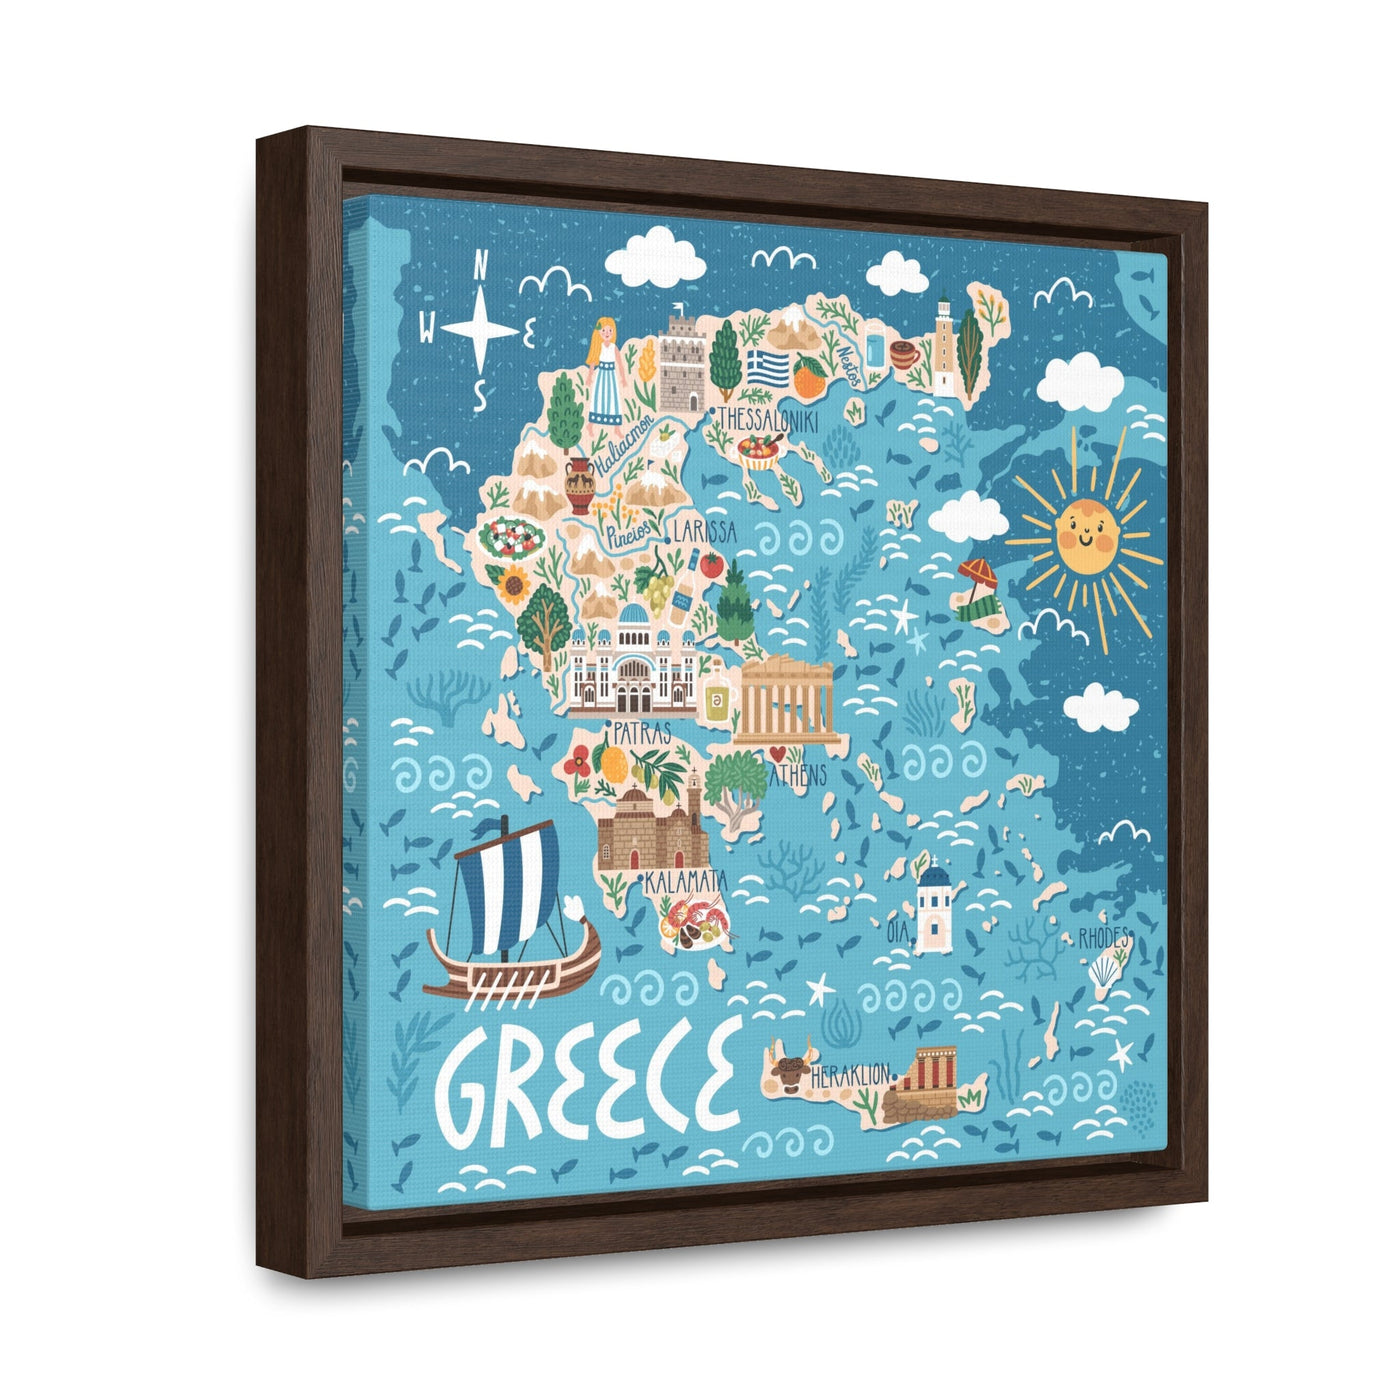 Greece Stylized Map Framed Canvas - Ezra's Clothing